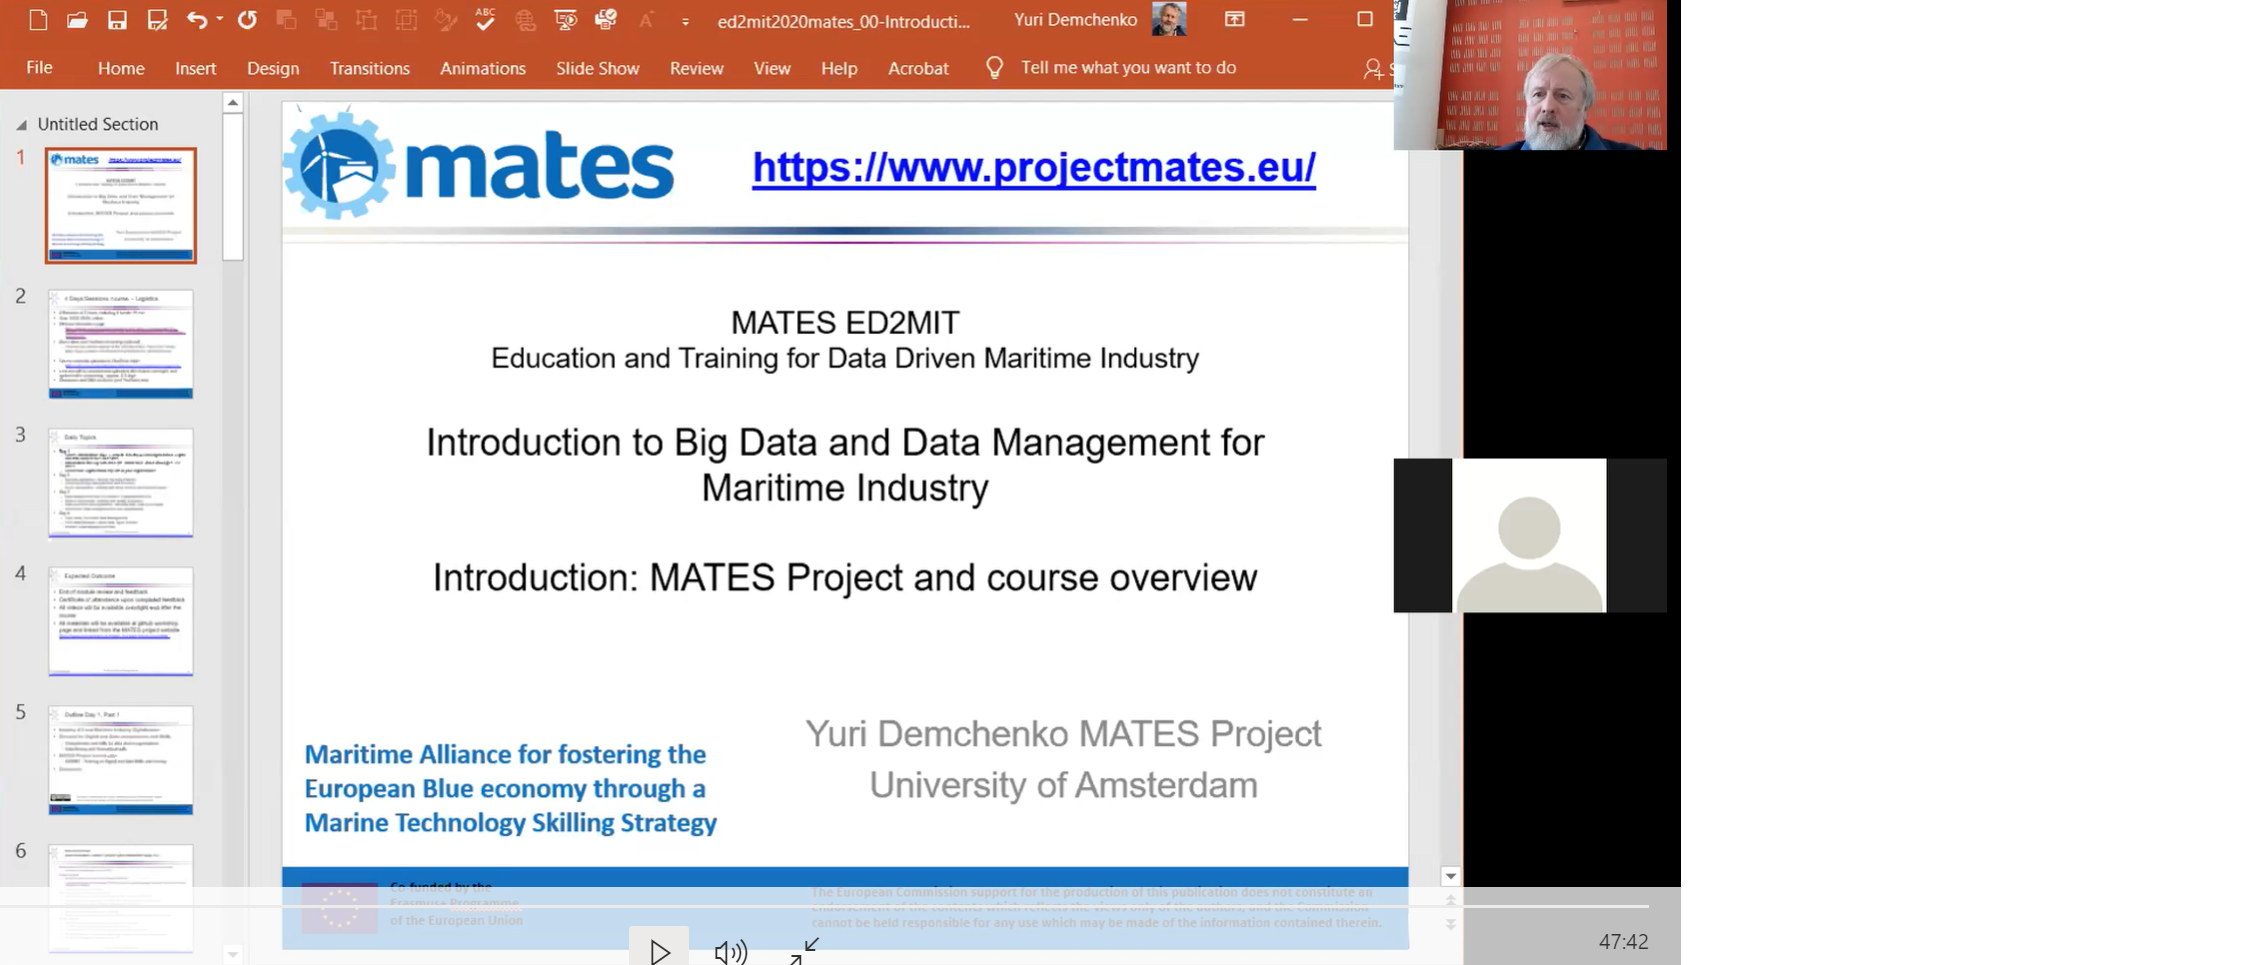 Yuri Demchenko delivering the MATES Big Data course online 12-15 October 2020